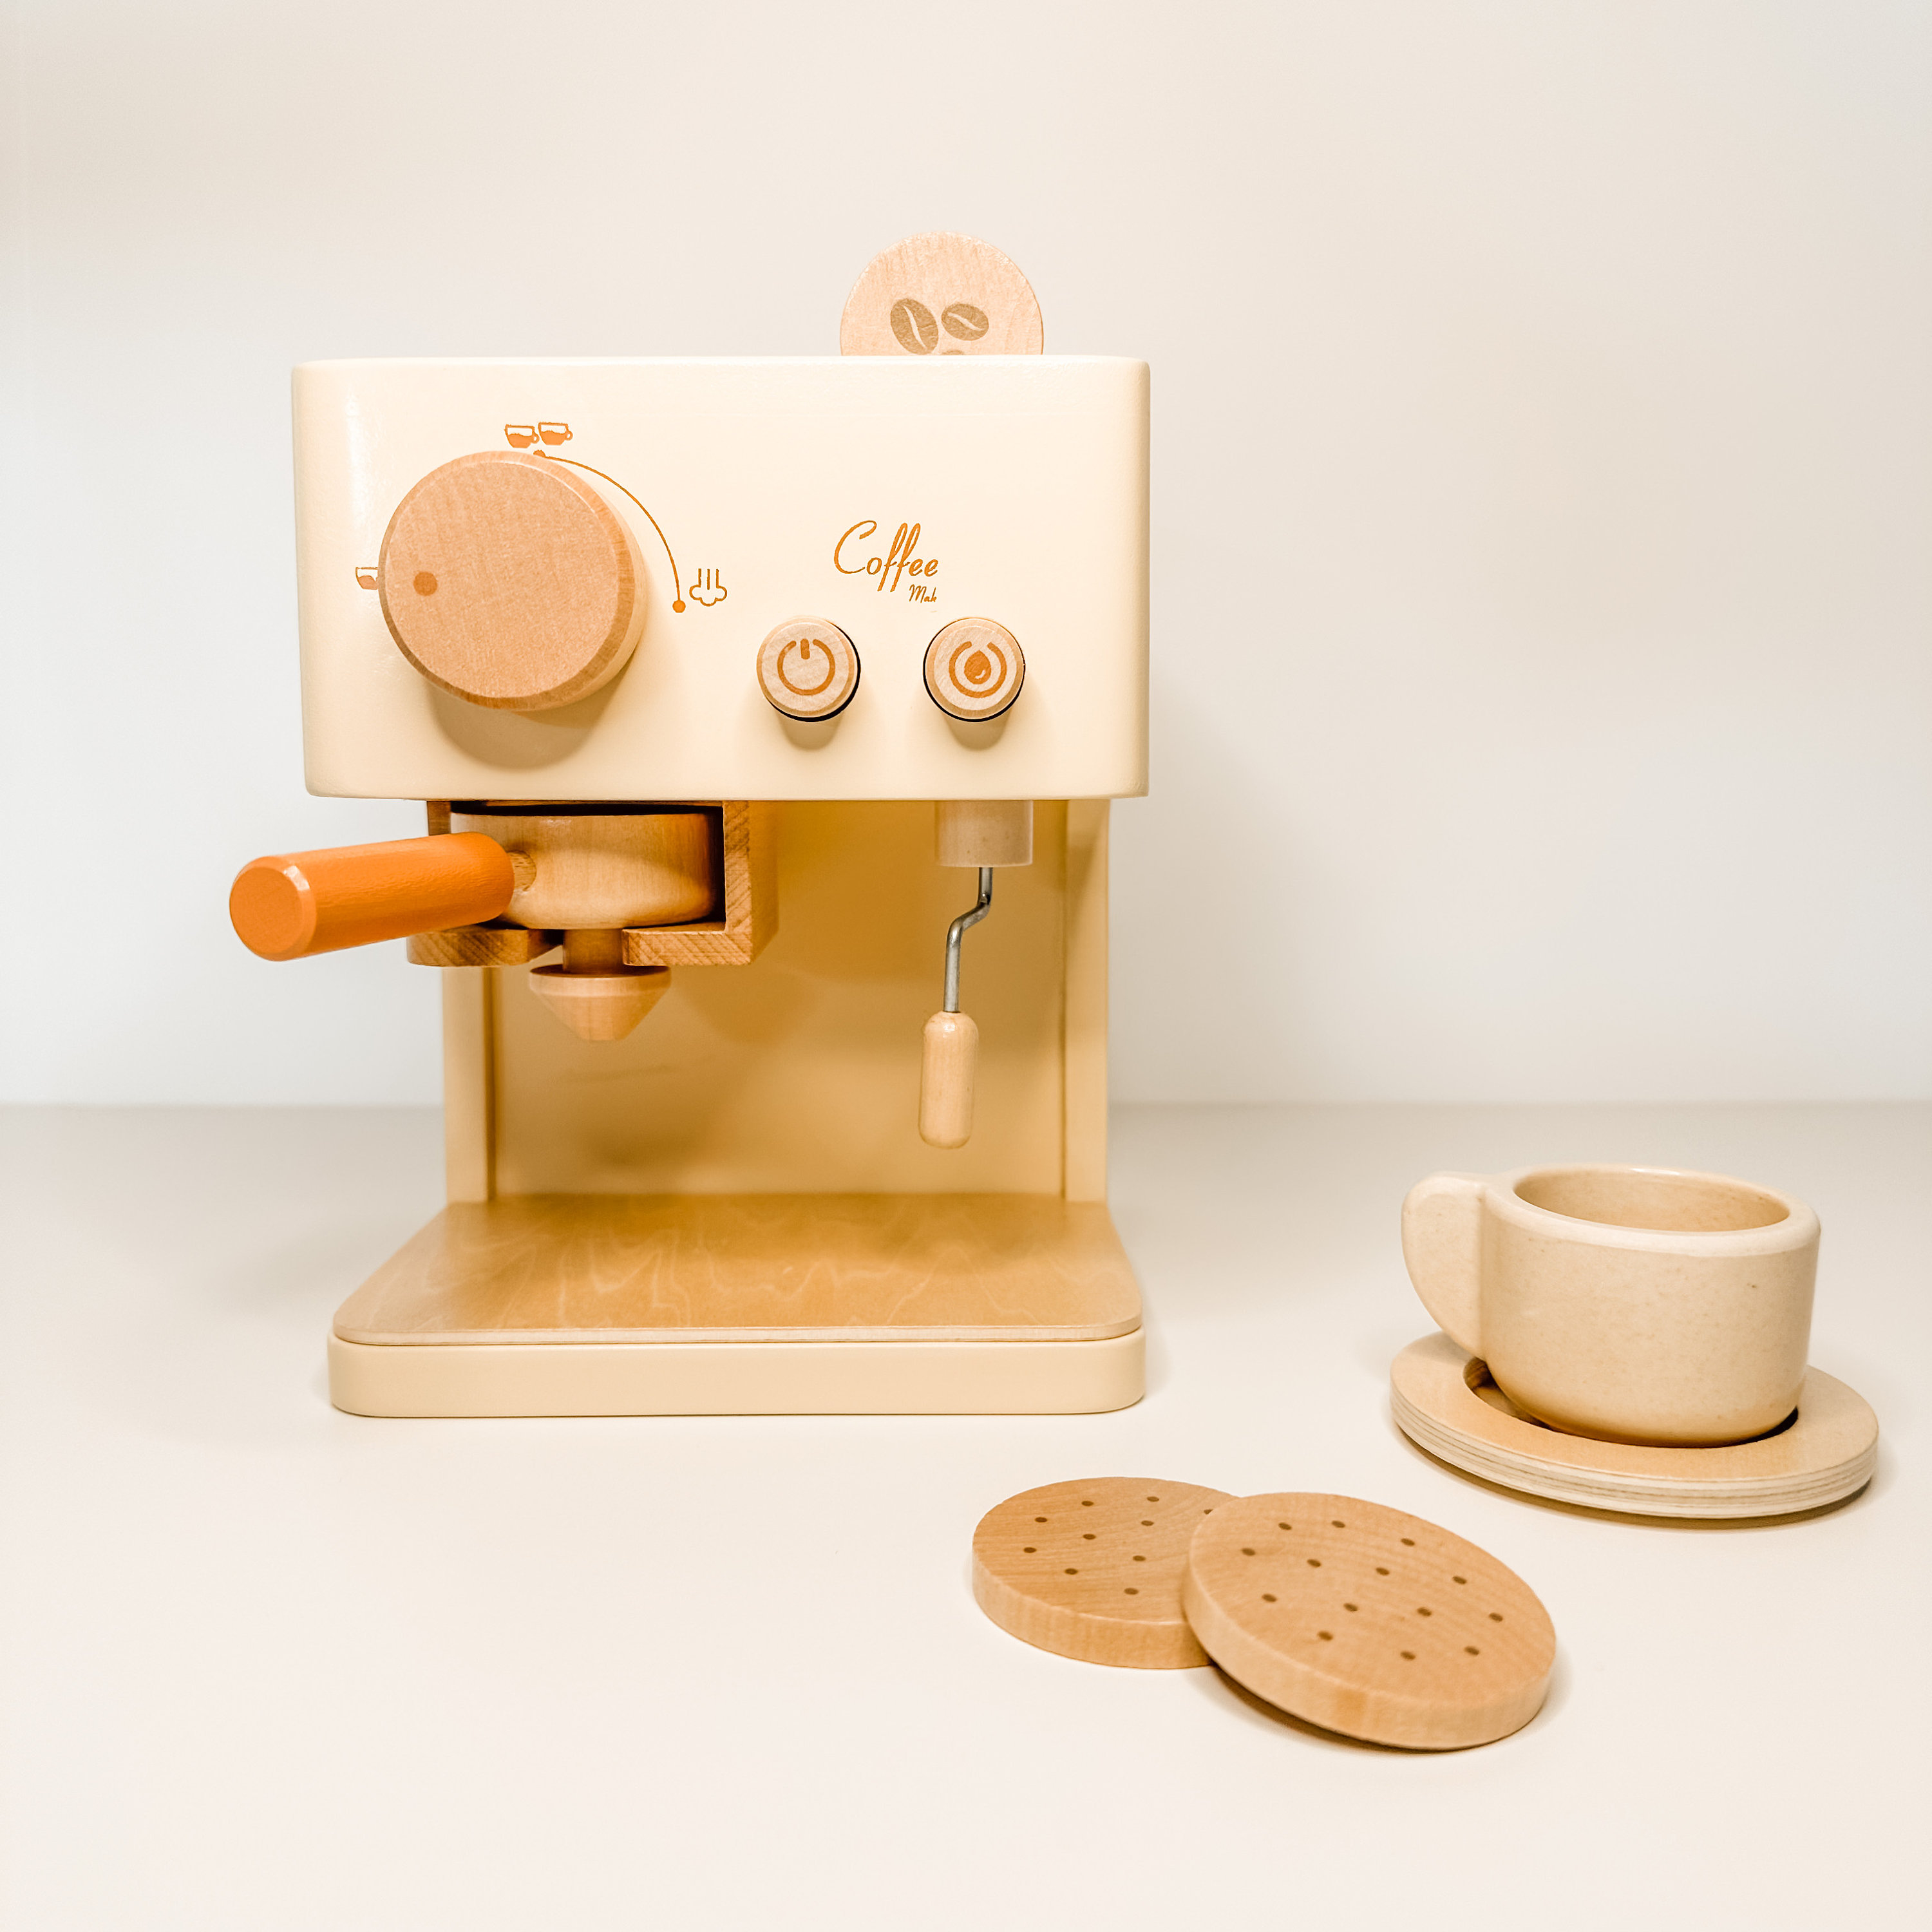 1970s Farberware #265 Automatic Drip Coffee Maker Rustic Country